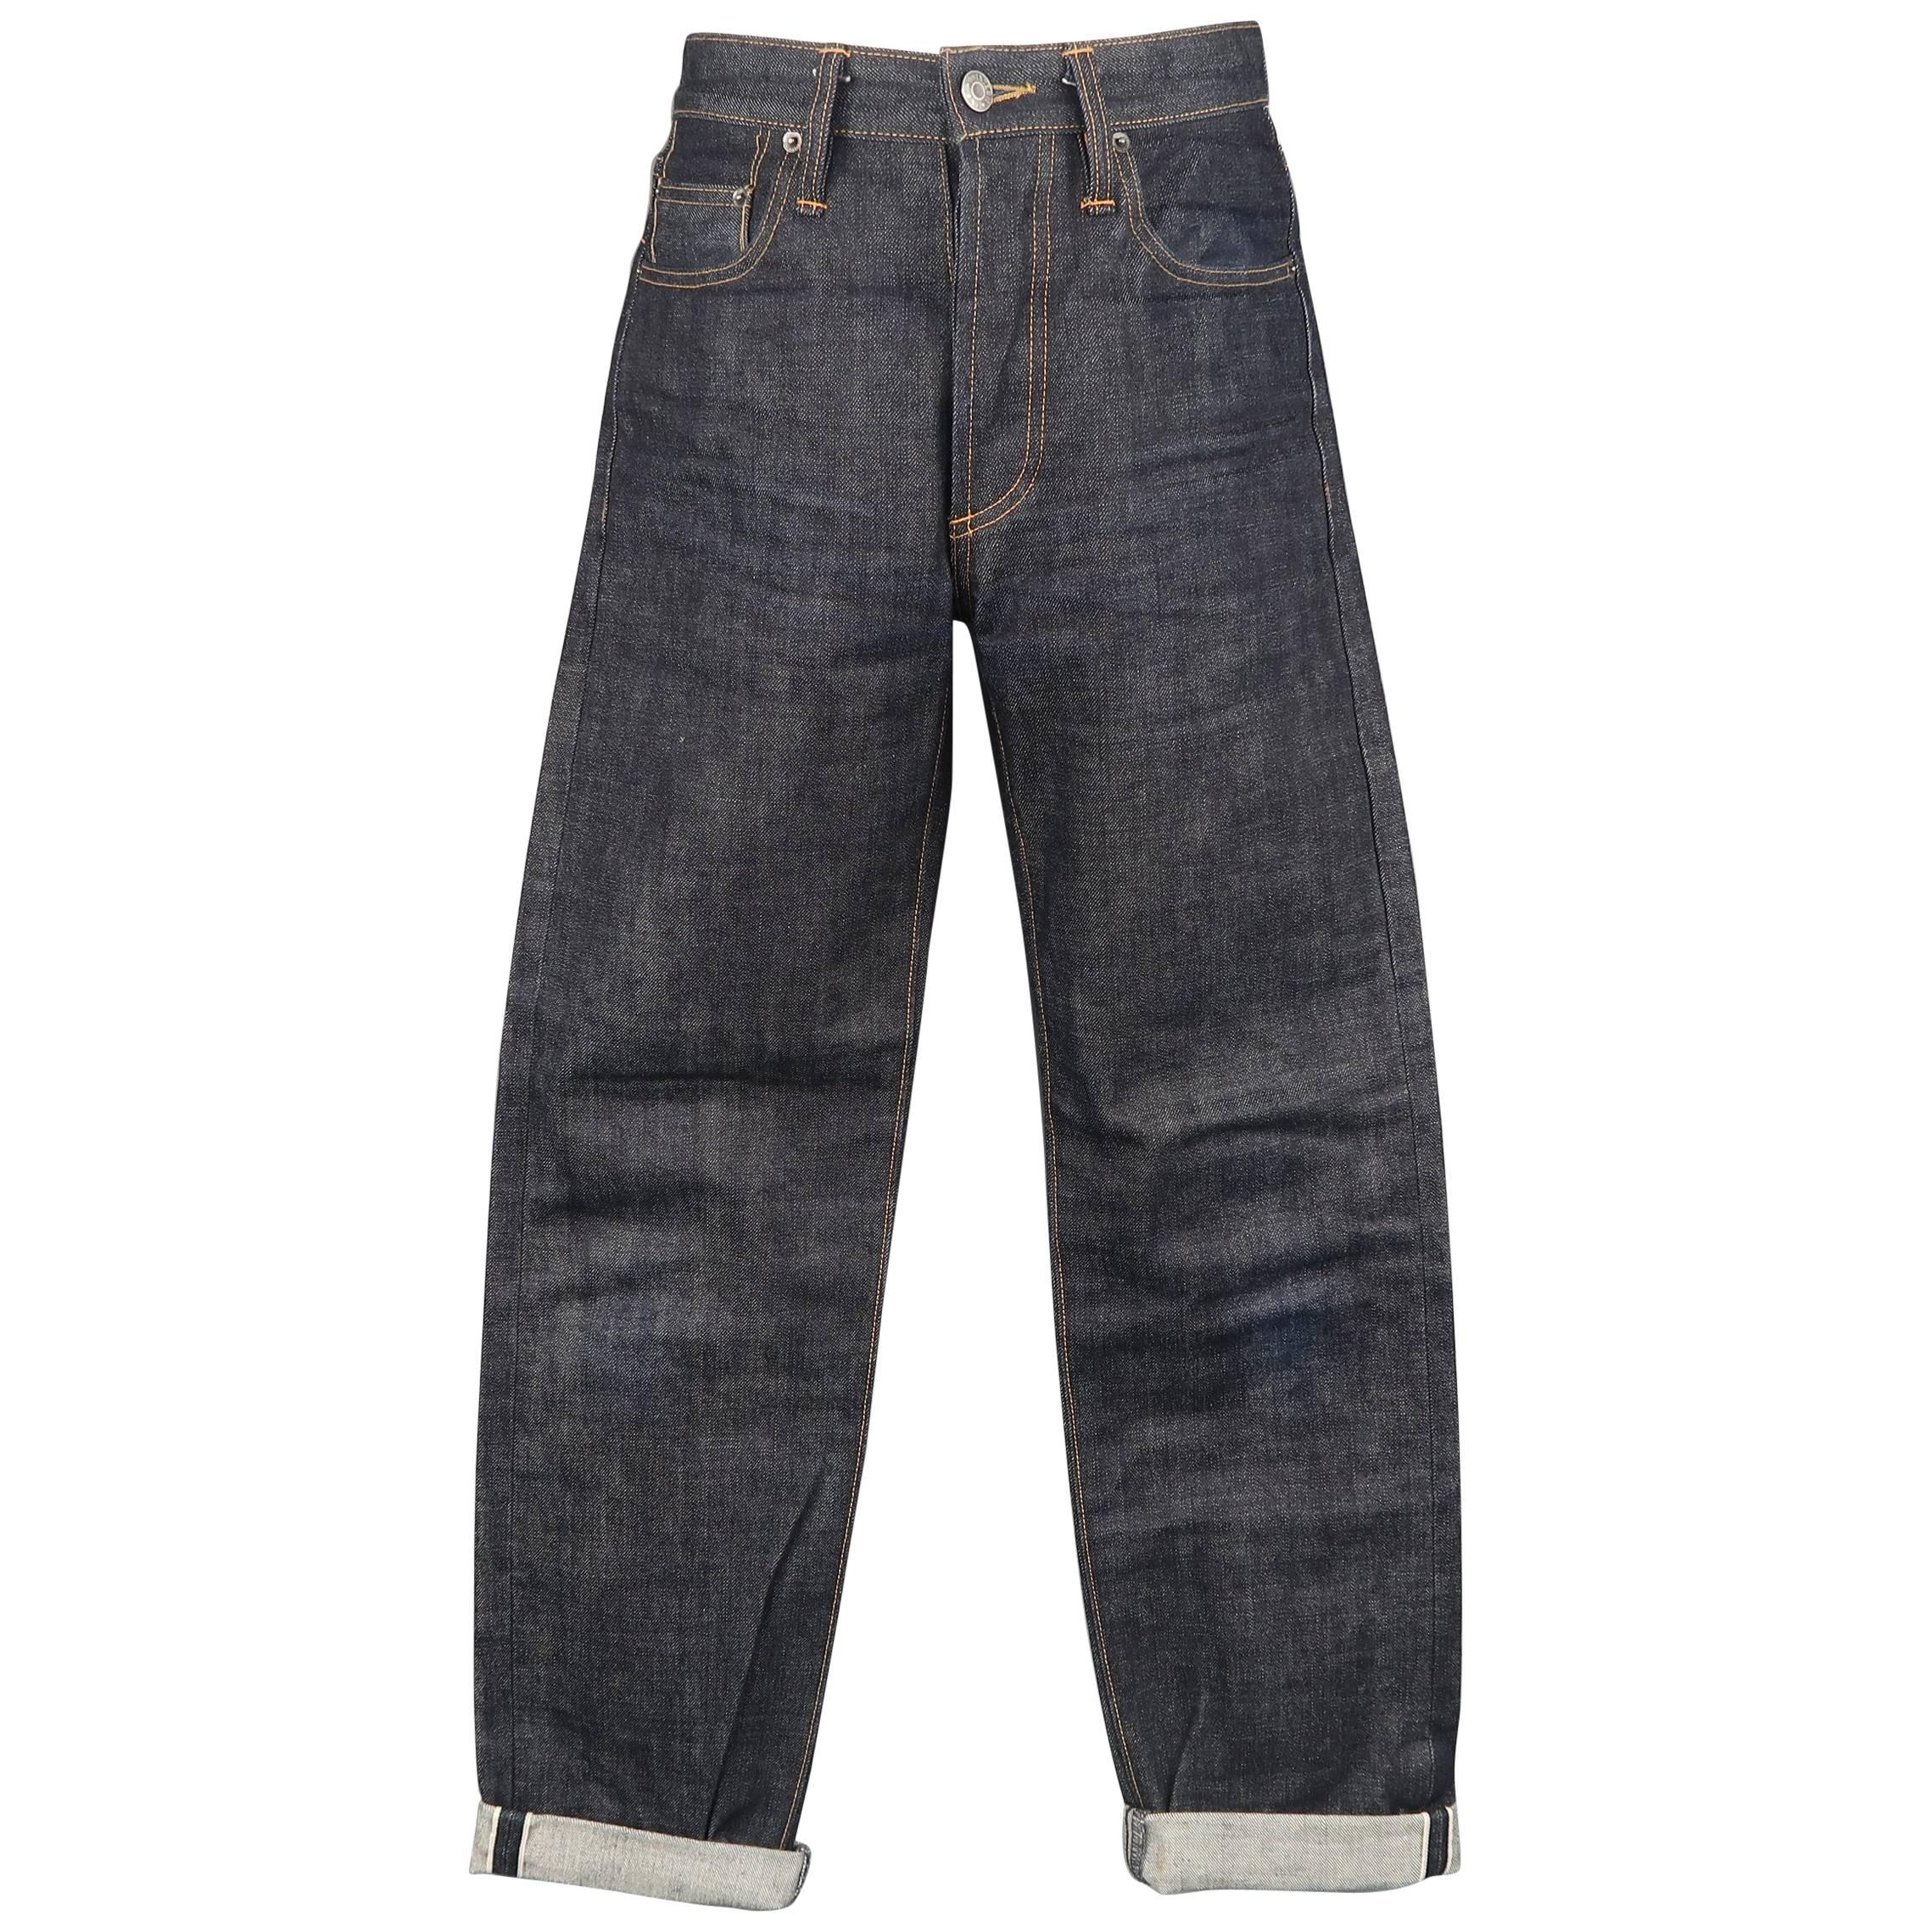 Men's 3SIXTEEN Size 30 Indigo Contrast Stitch Raw Selvedge Denim Jeans